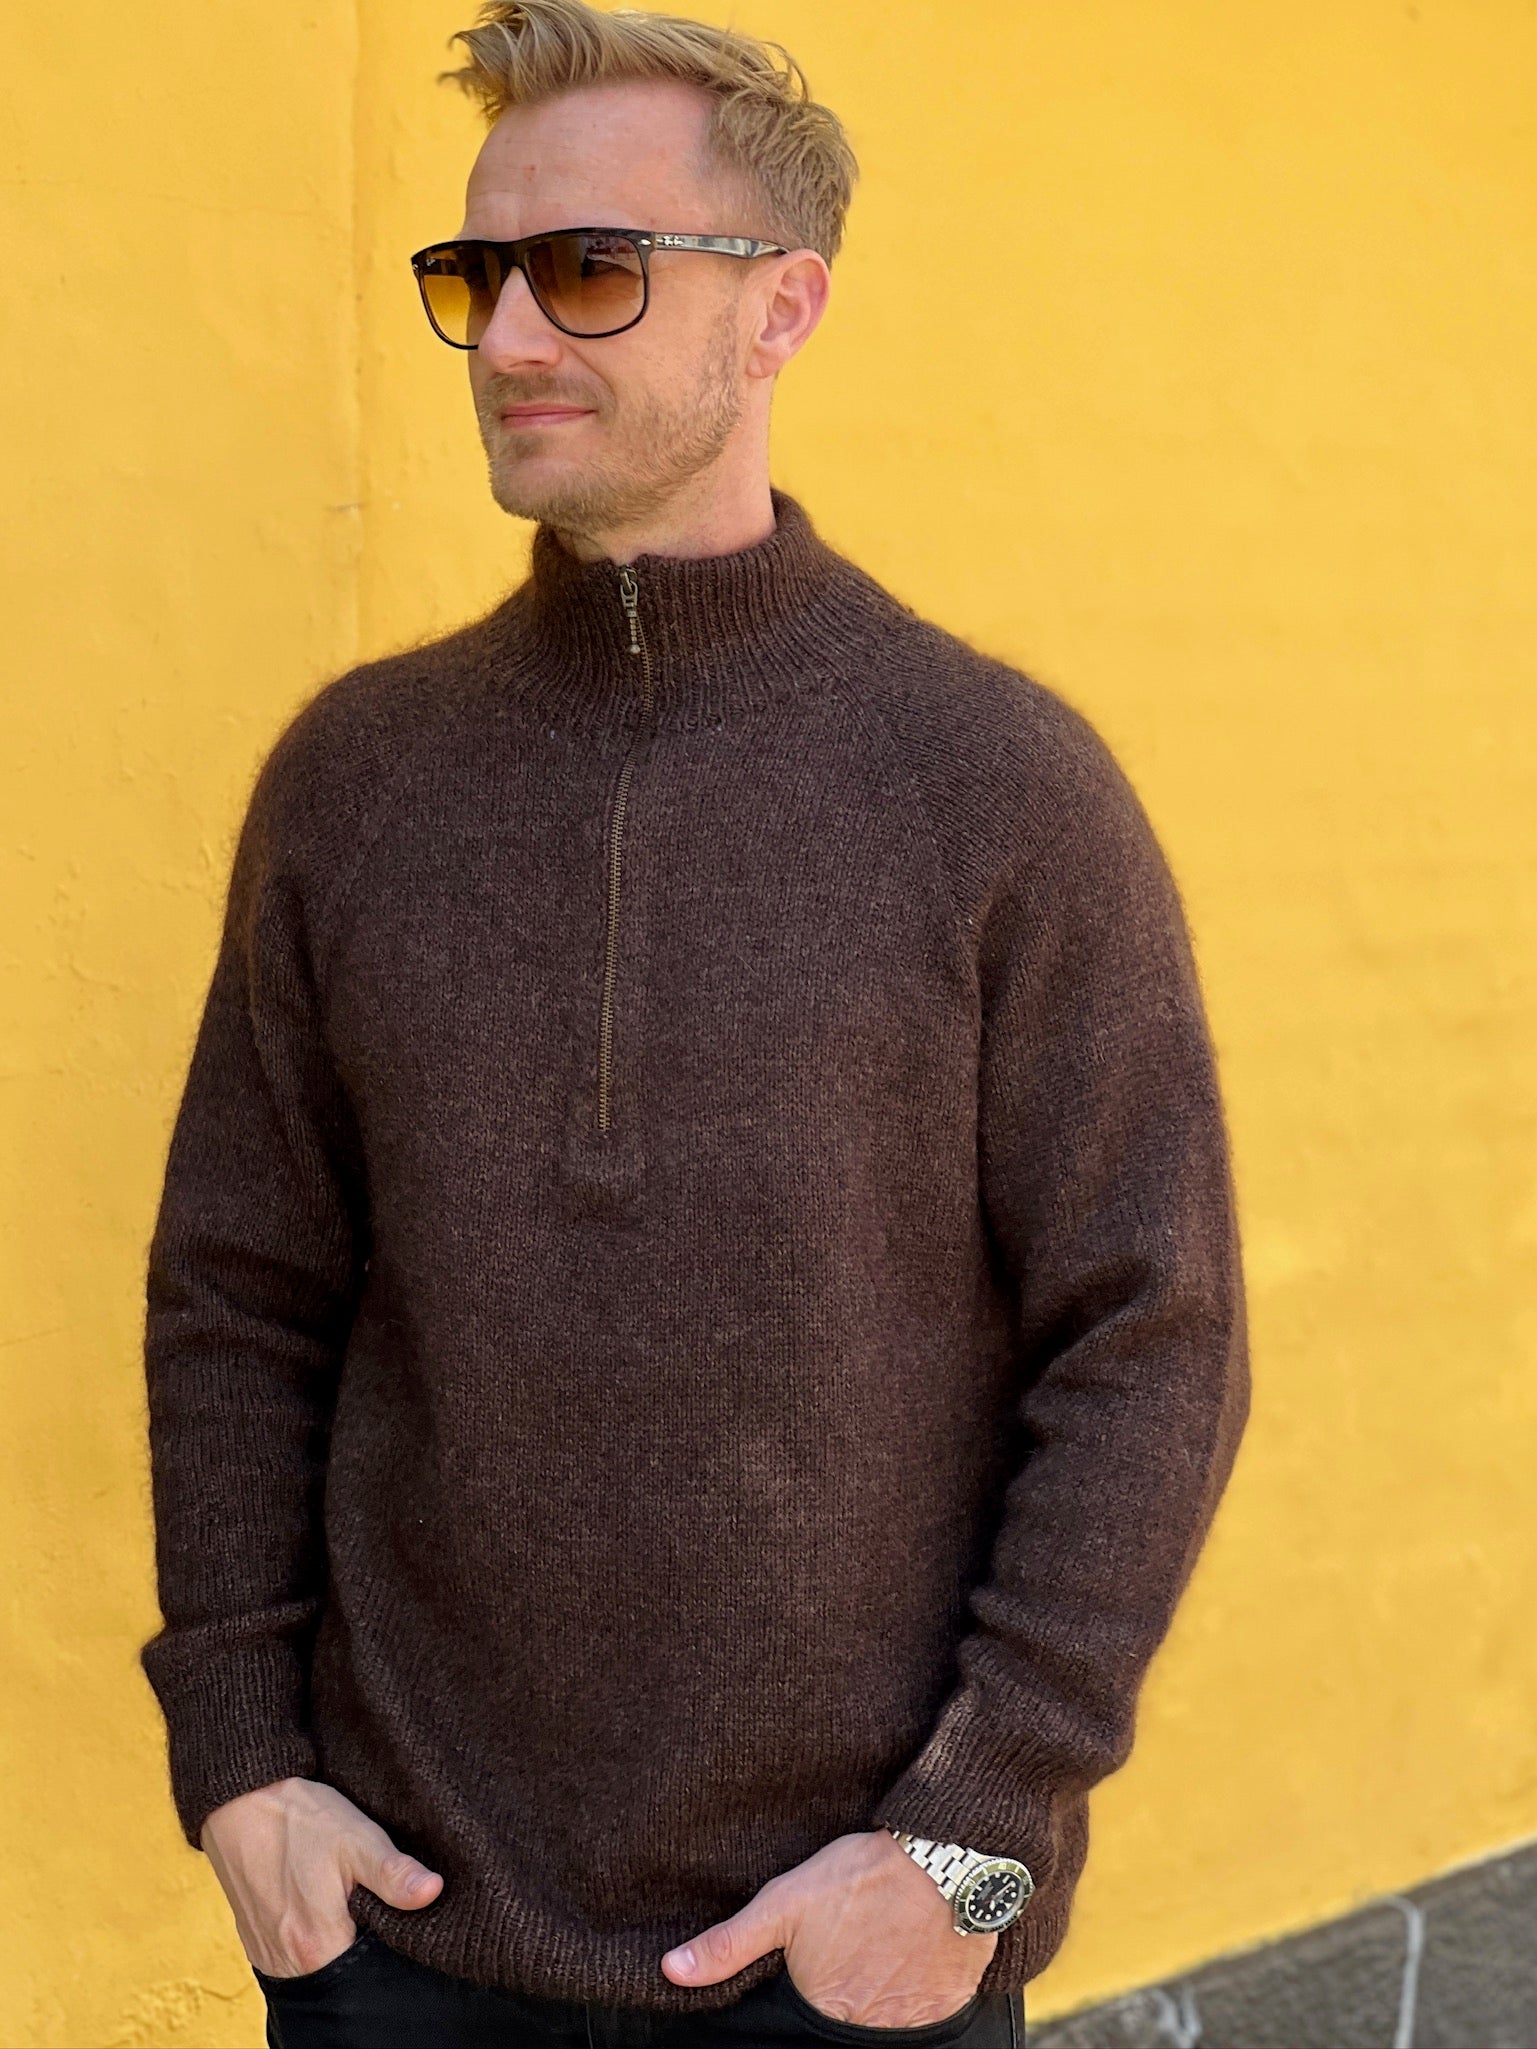 Zipper Sweater light Man - Strikkekit - PetiteKnit